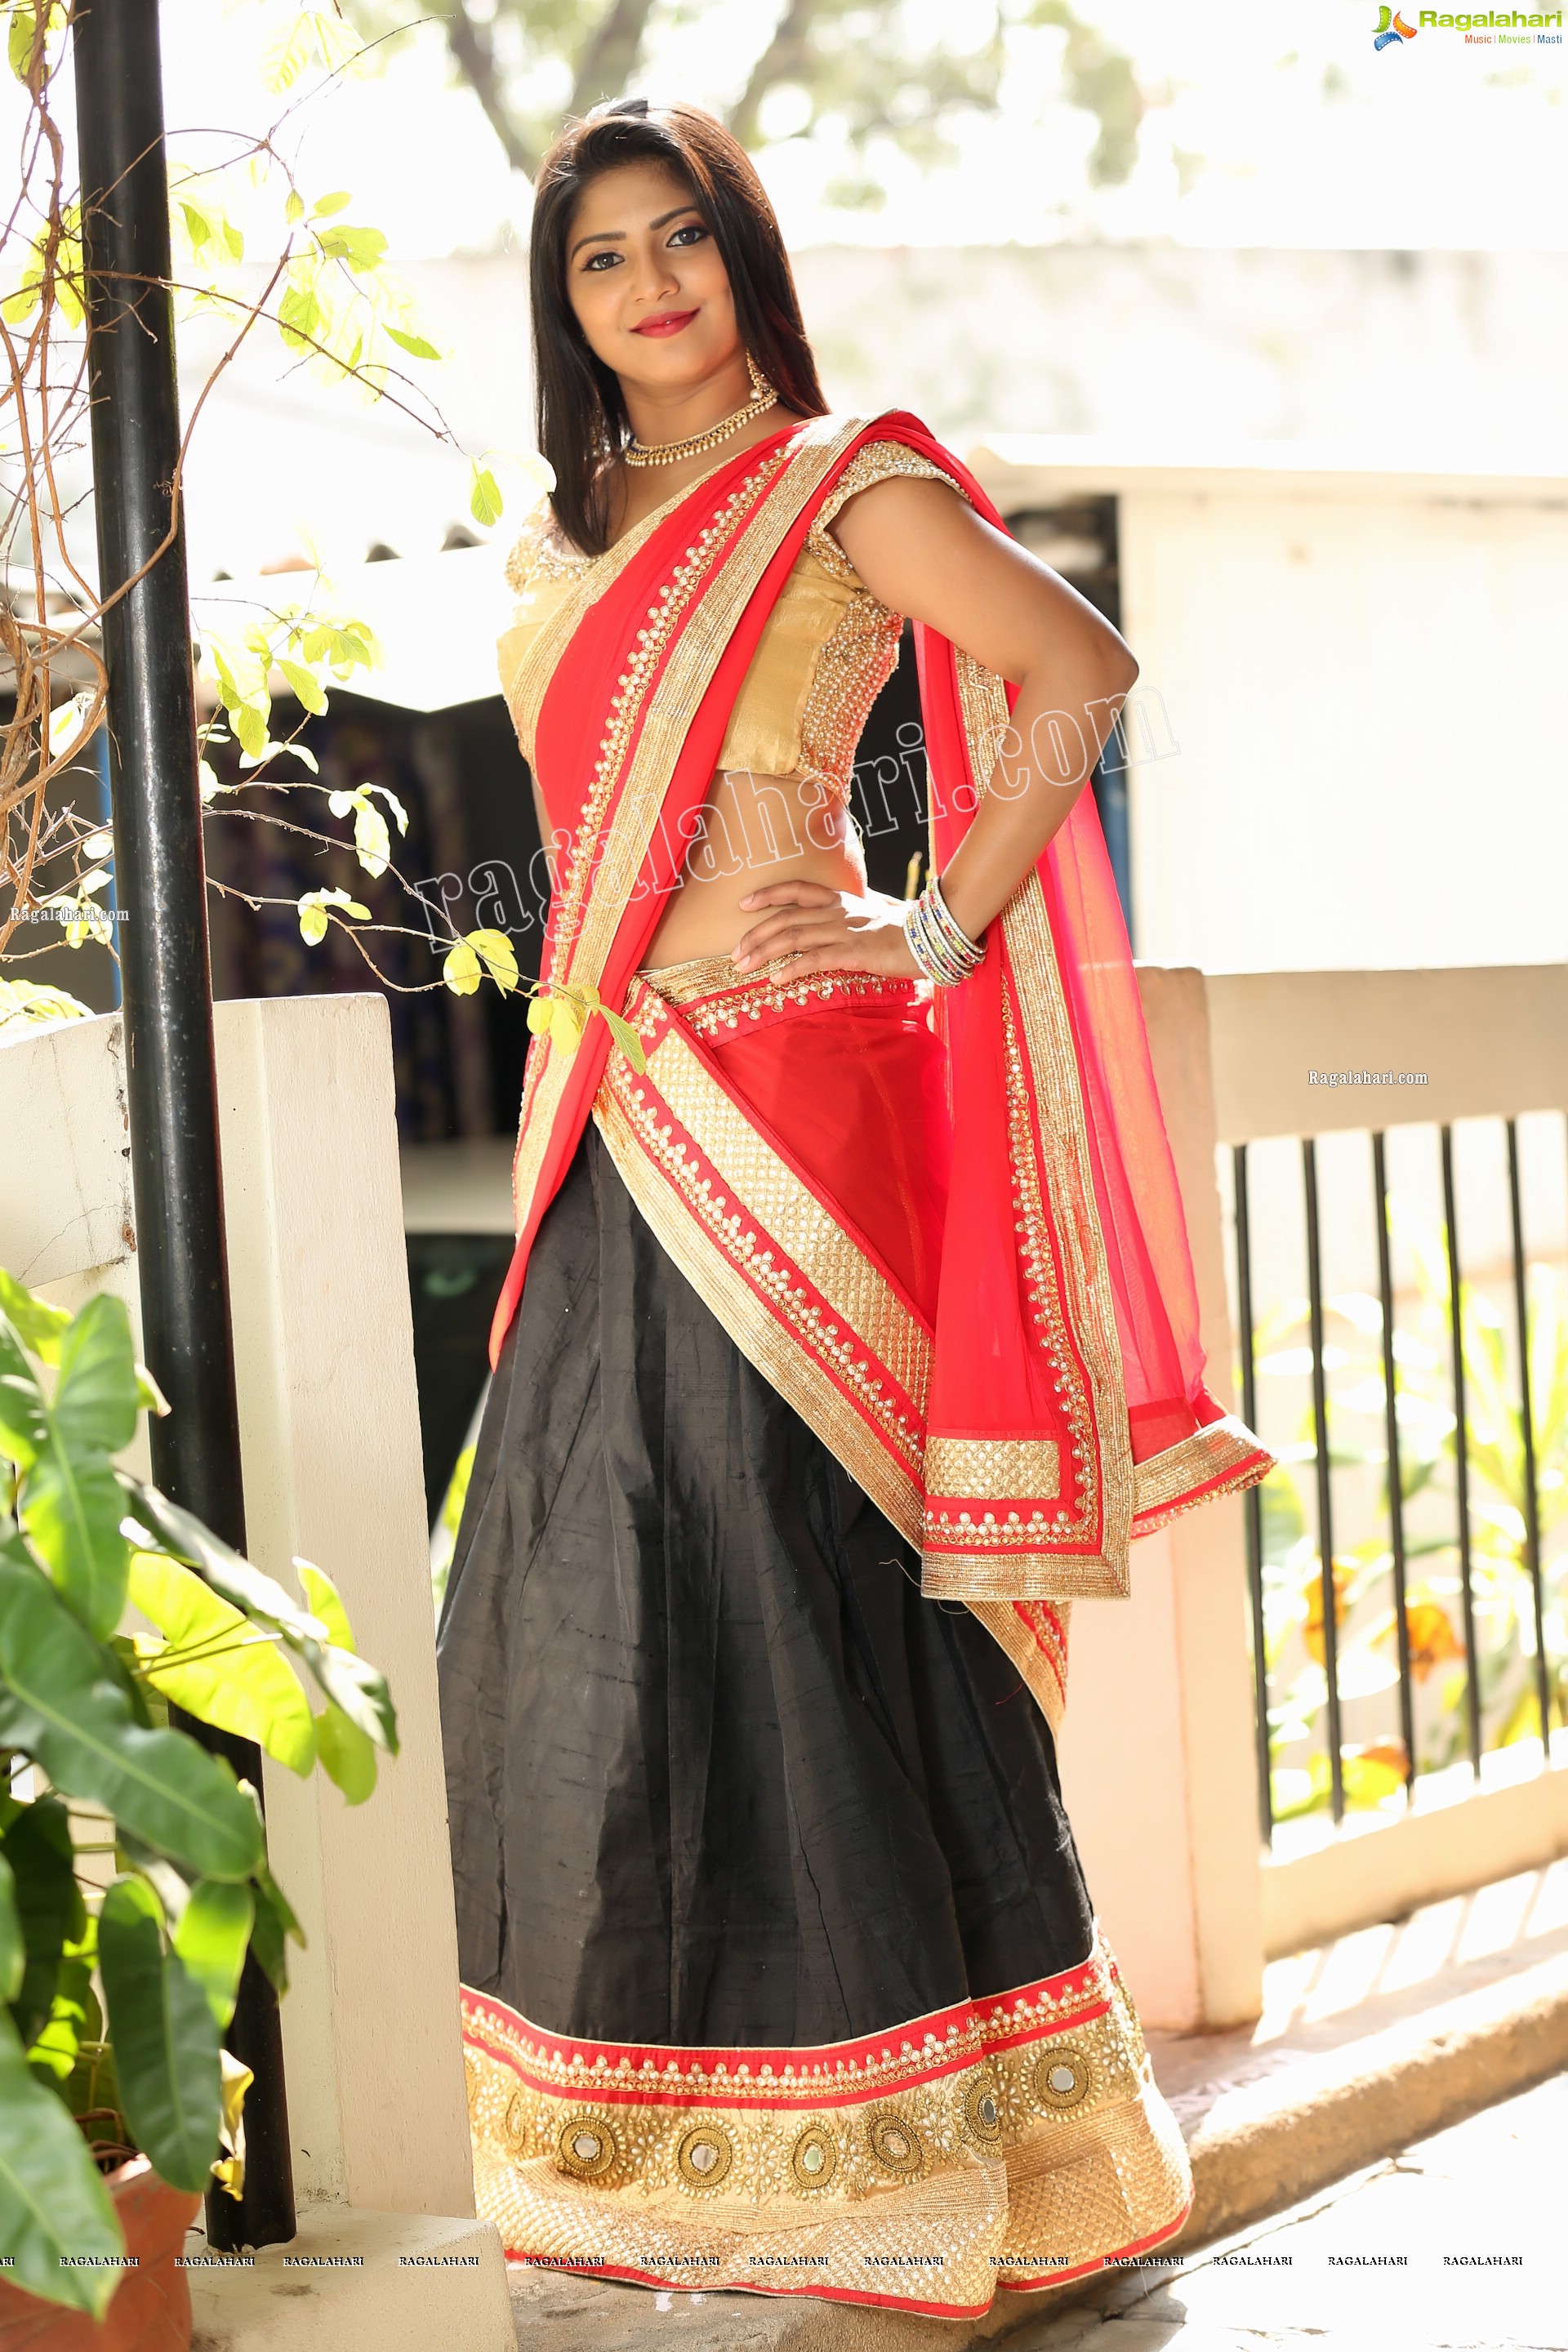 Shabeena Shaik in Black and Red Half Saree, Exclusive Photo Shoot